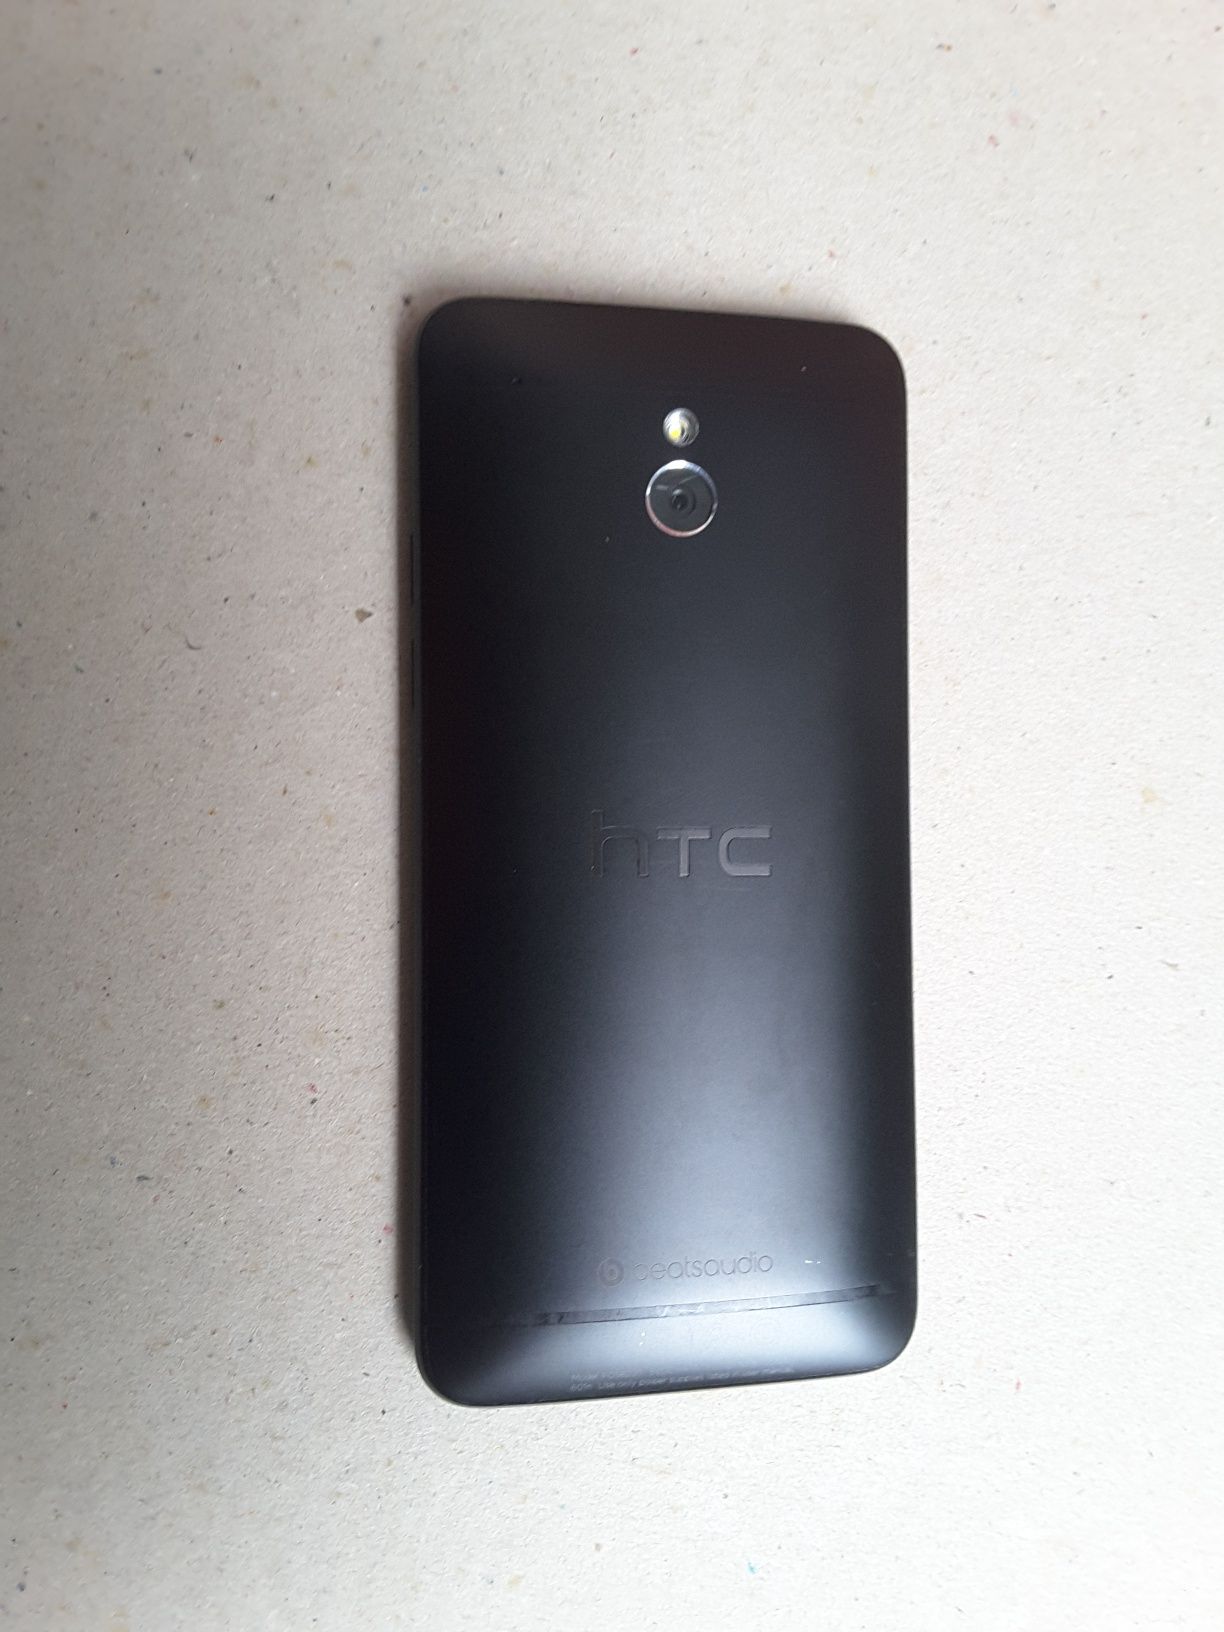 HTC mini One defect